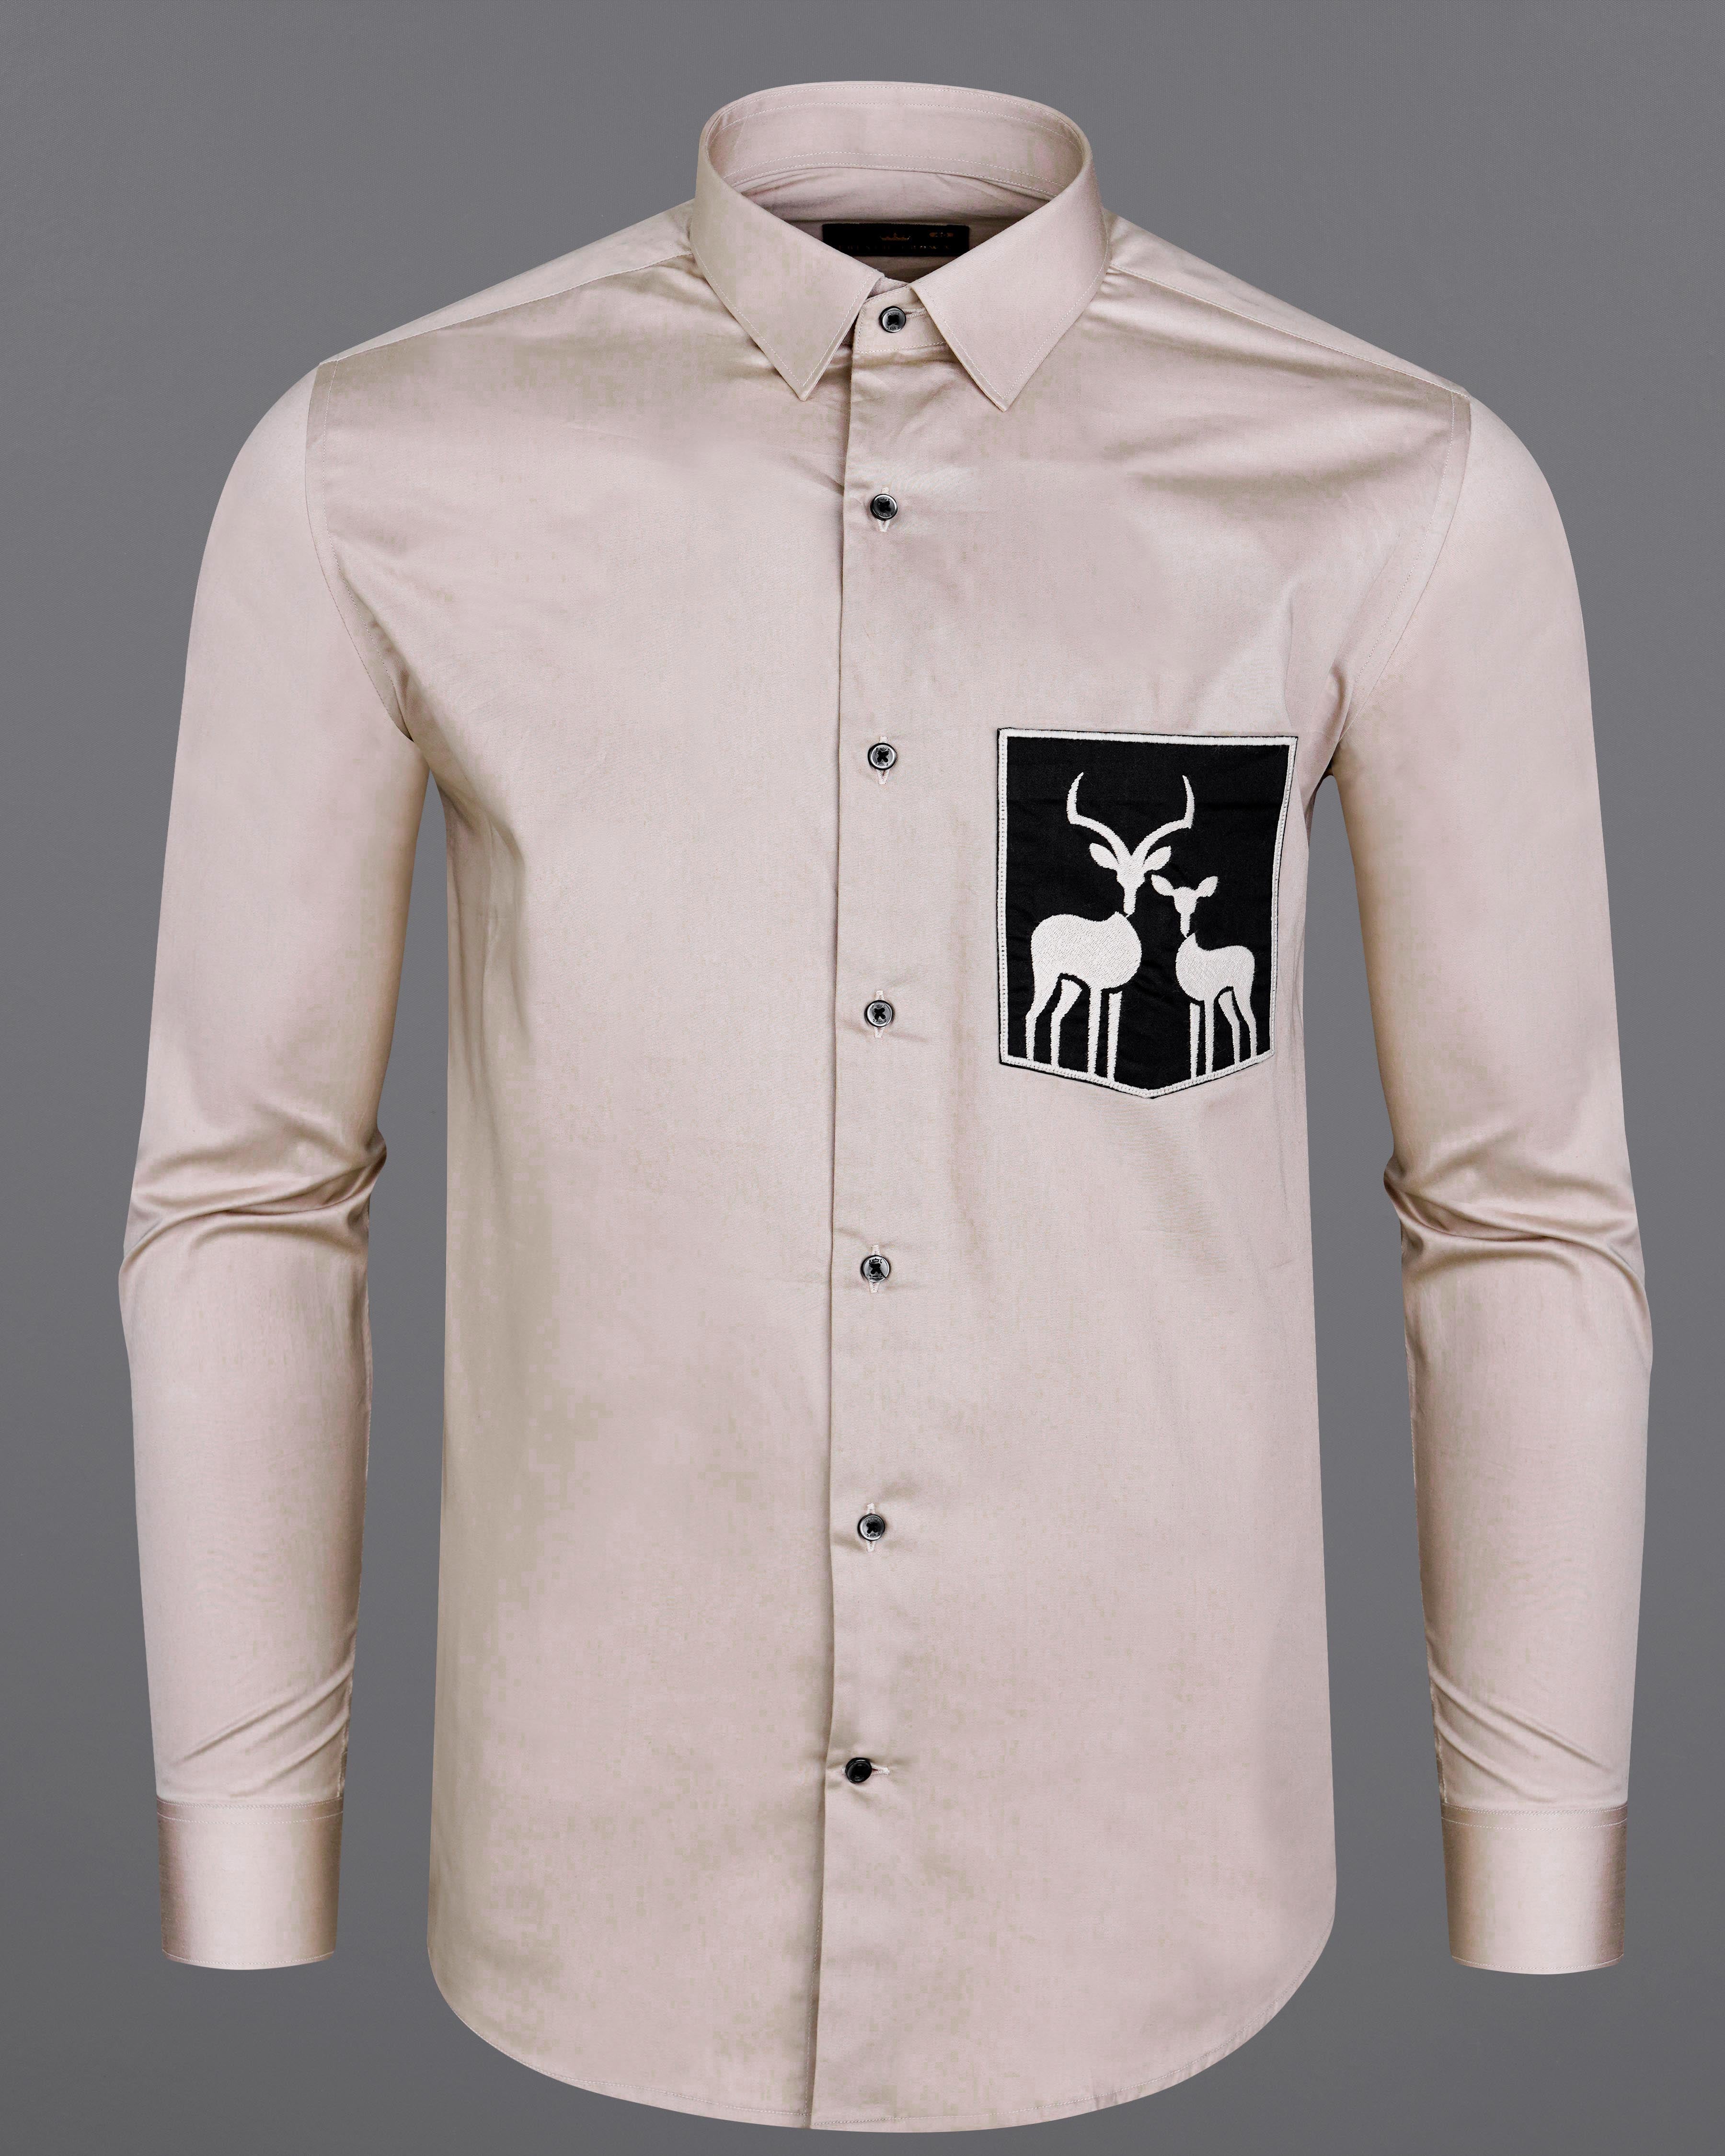 Soft Amber Brown with Black Patch Subtle Sheen Pocket Deer Embroidered Super Soft Premium Cotton Shirt 8435-E002-38, 8435-E002-H-38, 8435-E002-39, 8435-E002-H-39, 8435-E002-40, 8435-E002-H-40, 8435-E002-42, 8435-E002-H-42, 8435-E002-44, 8435-E002-H-44, 8435-E002-46, 8435-E002-H-46, 8435-E002-48, 8435-E002-H-48, 8435-E002-50, 8435-E002-H-50, 8435-E002-52, 8435-E002-H-52